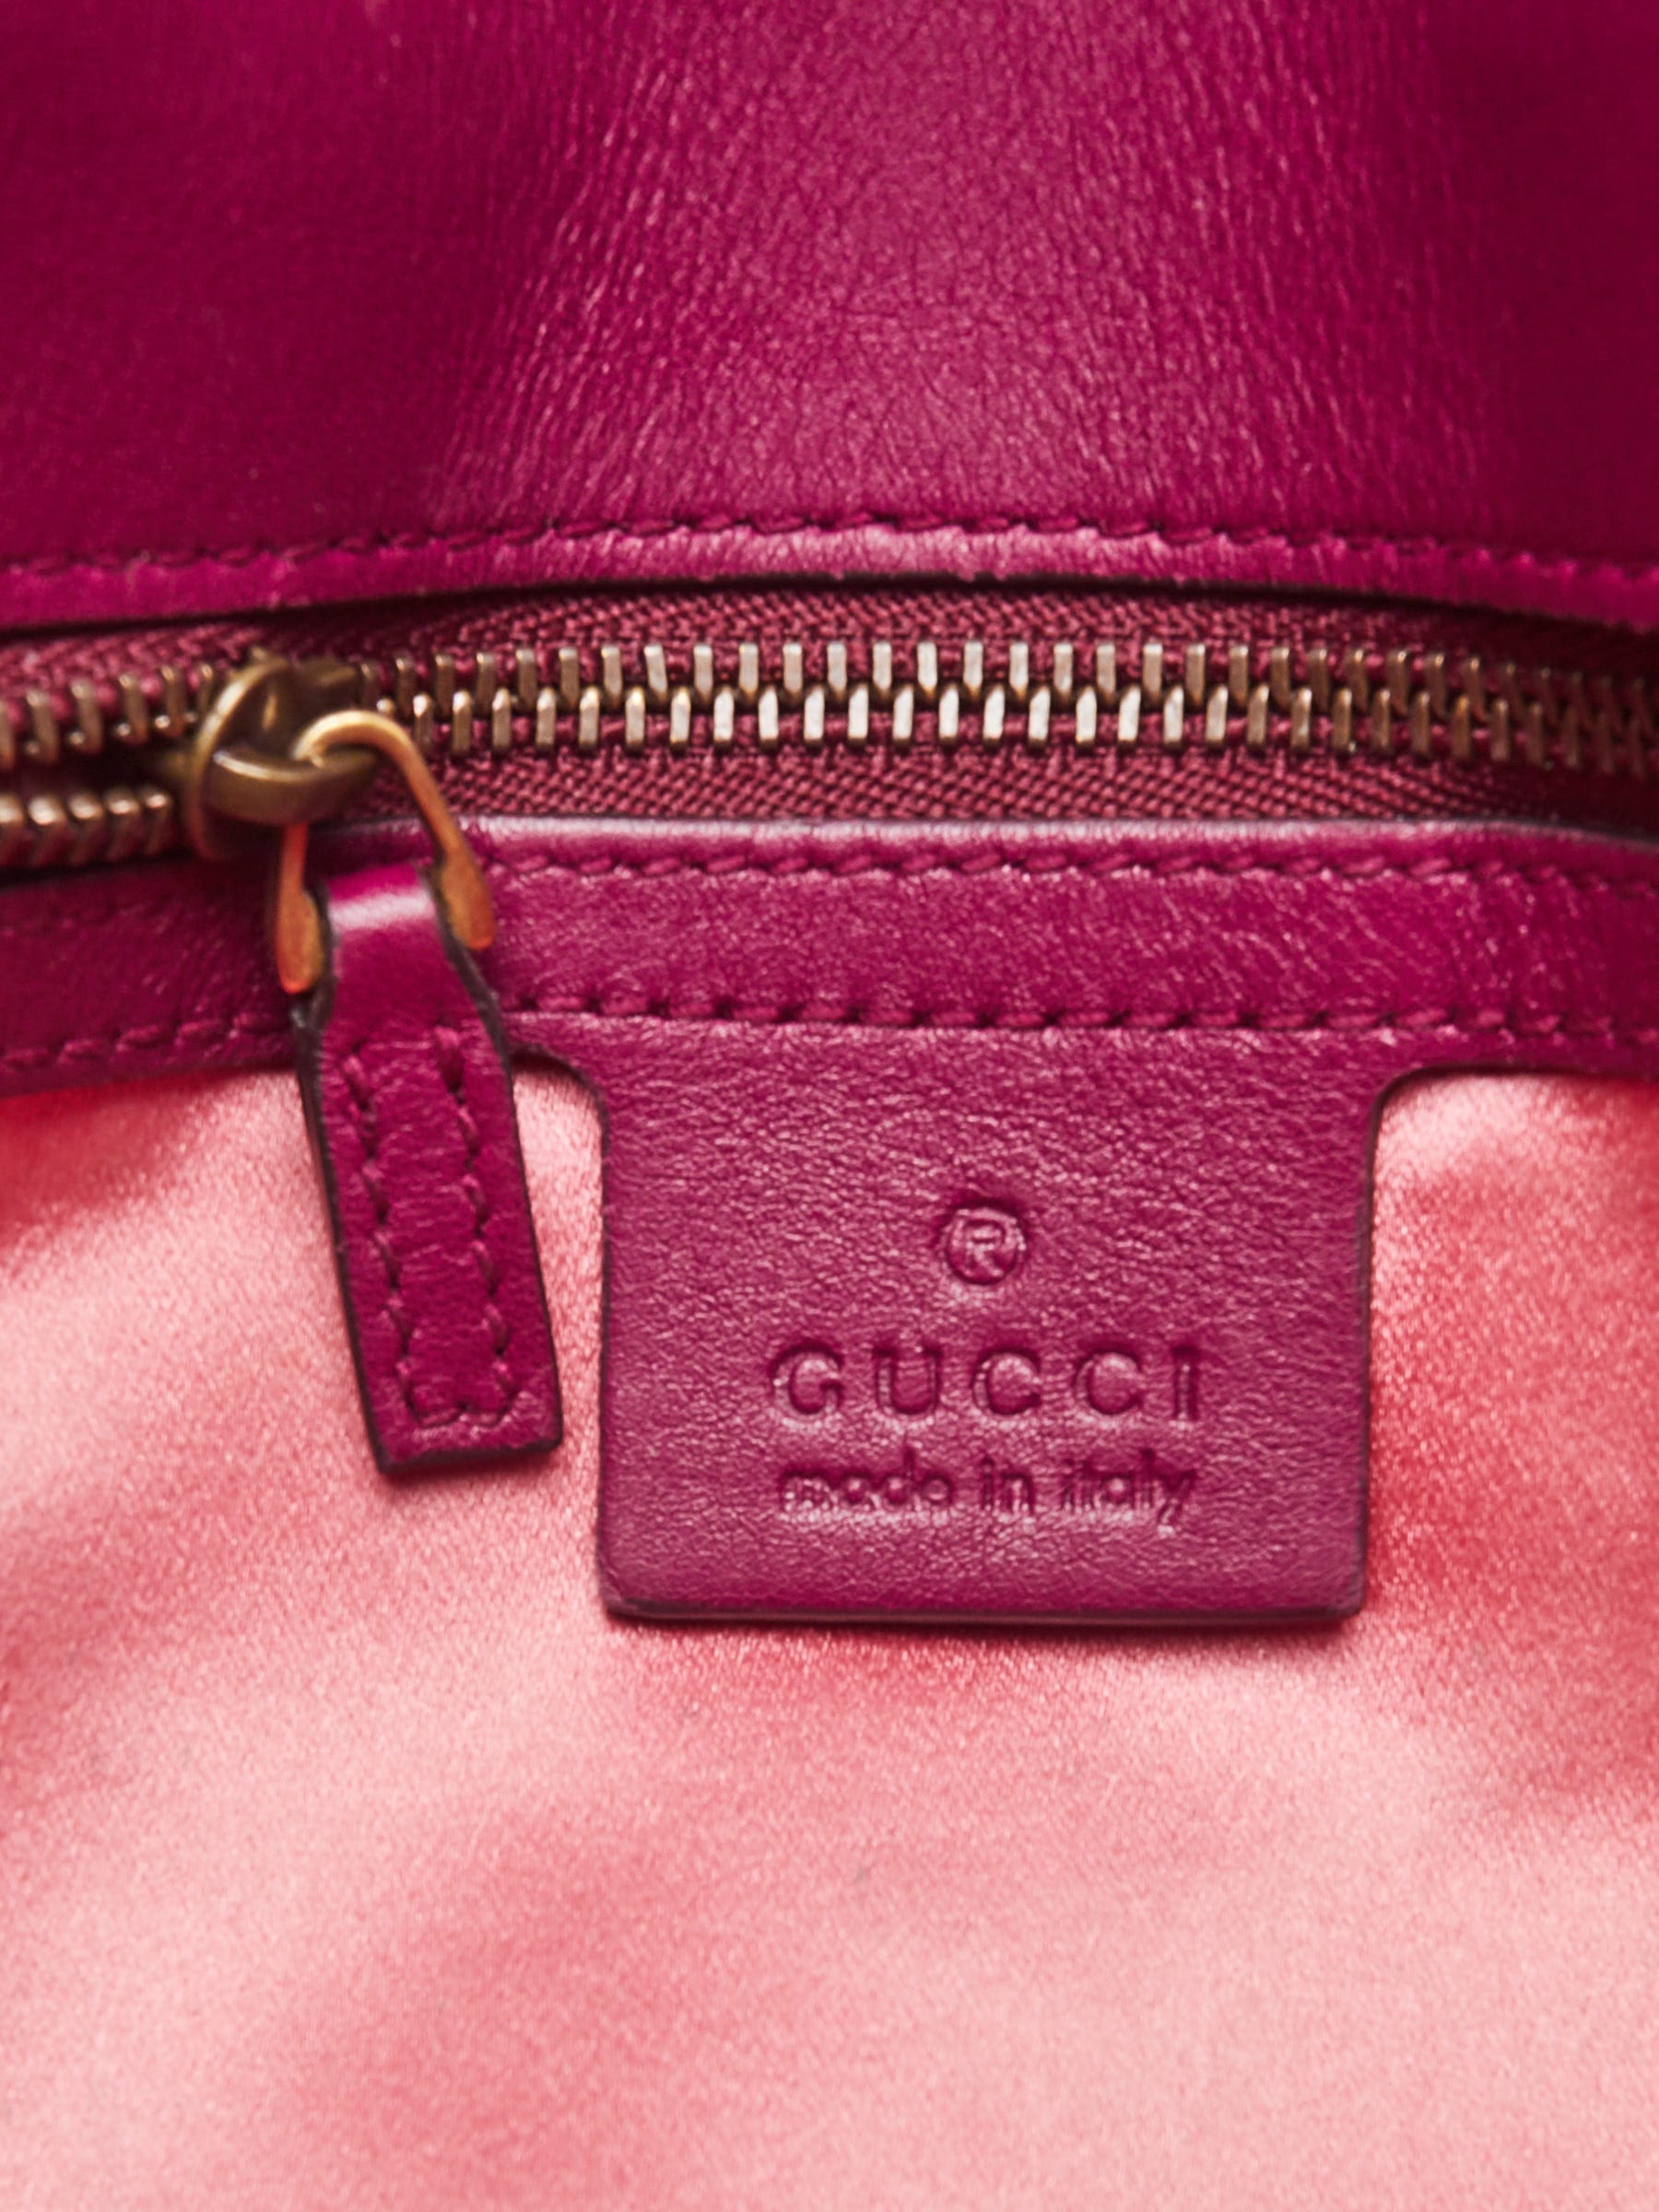 Gucci GG Marmont Ultra Violet Purple Bag